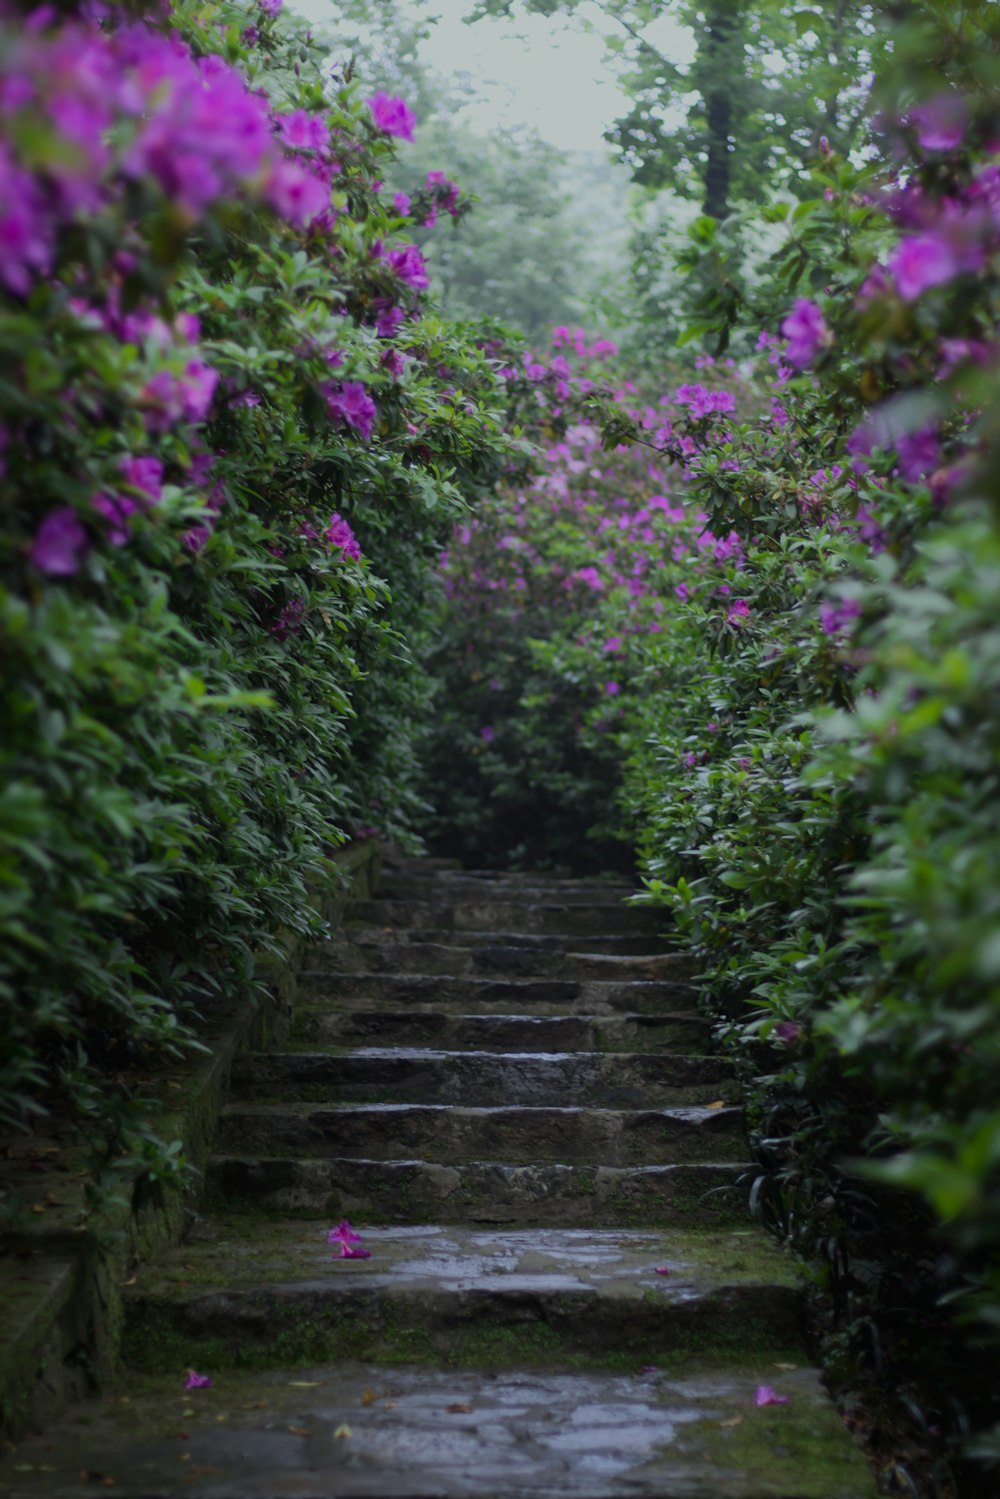 pétalas roxas da flor nas escadas